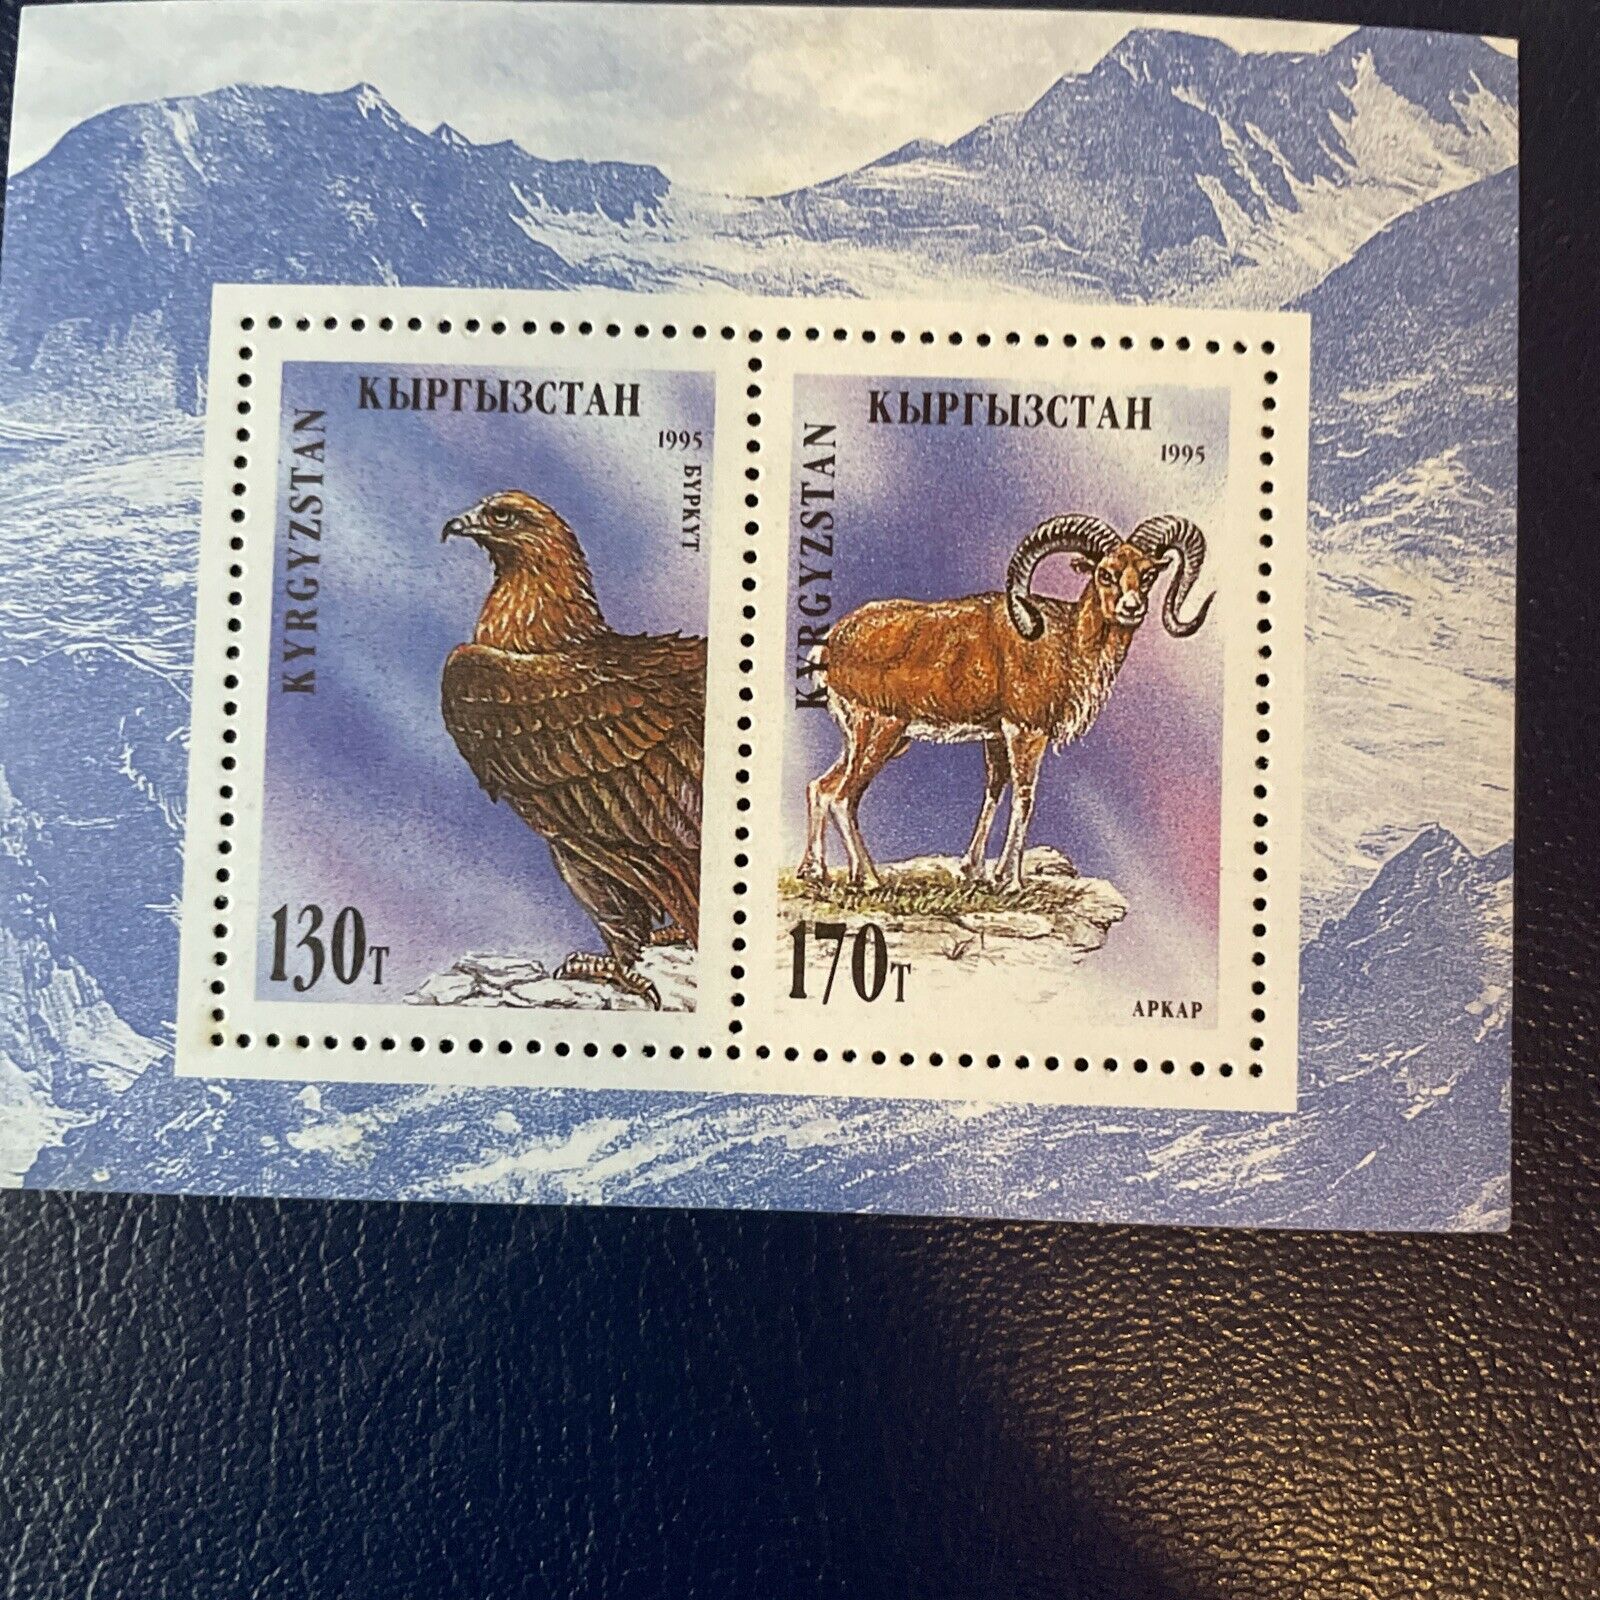 Kyrgyzstan Stamp 60